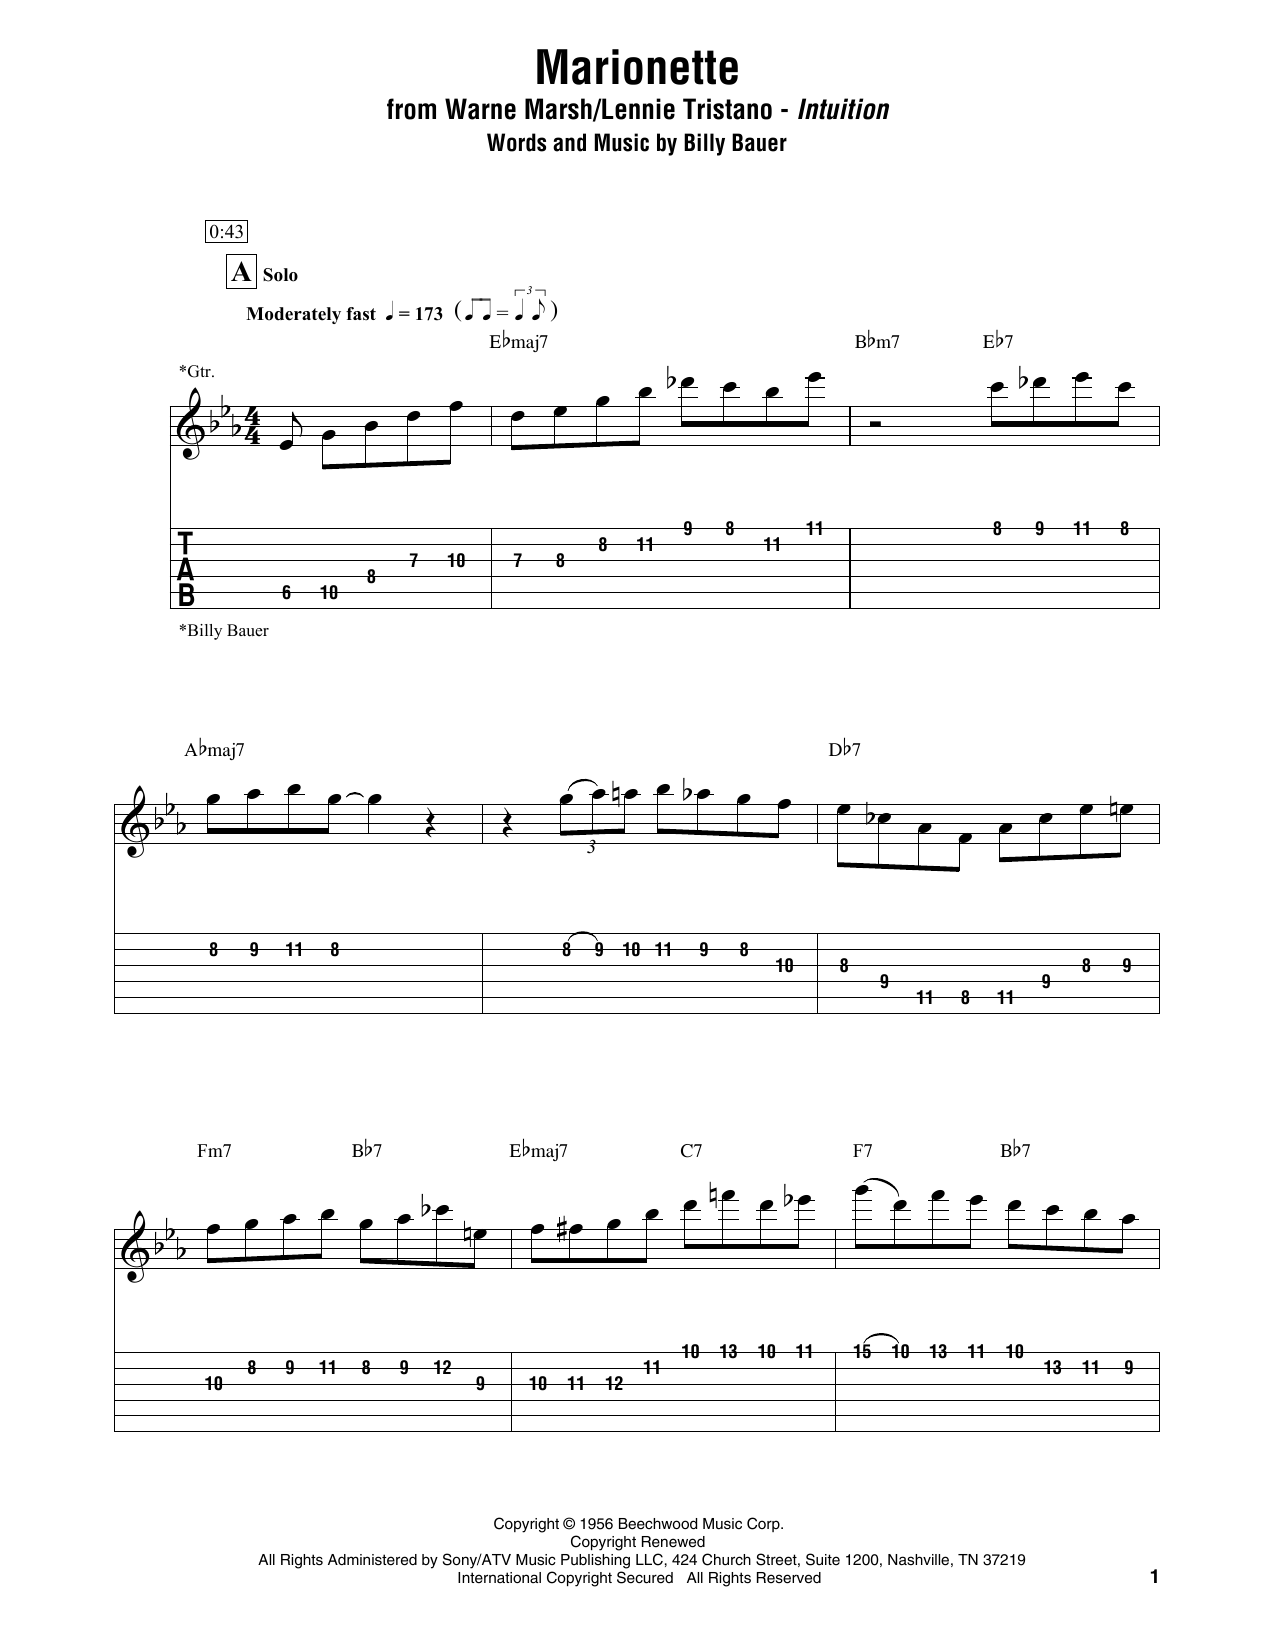 Warne Marsh & Lennie Tristano Marionette Sheet Music Notes & Chords for Electric Guitar Transcription - Download or Print PDF